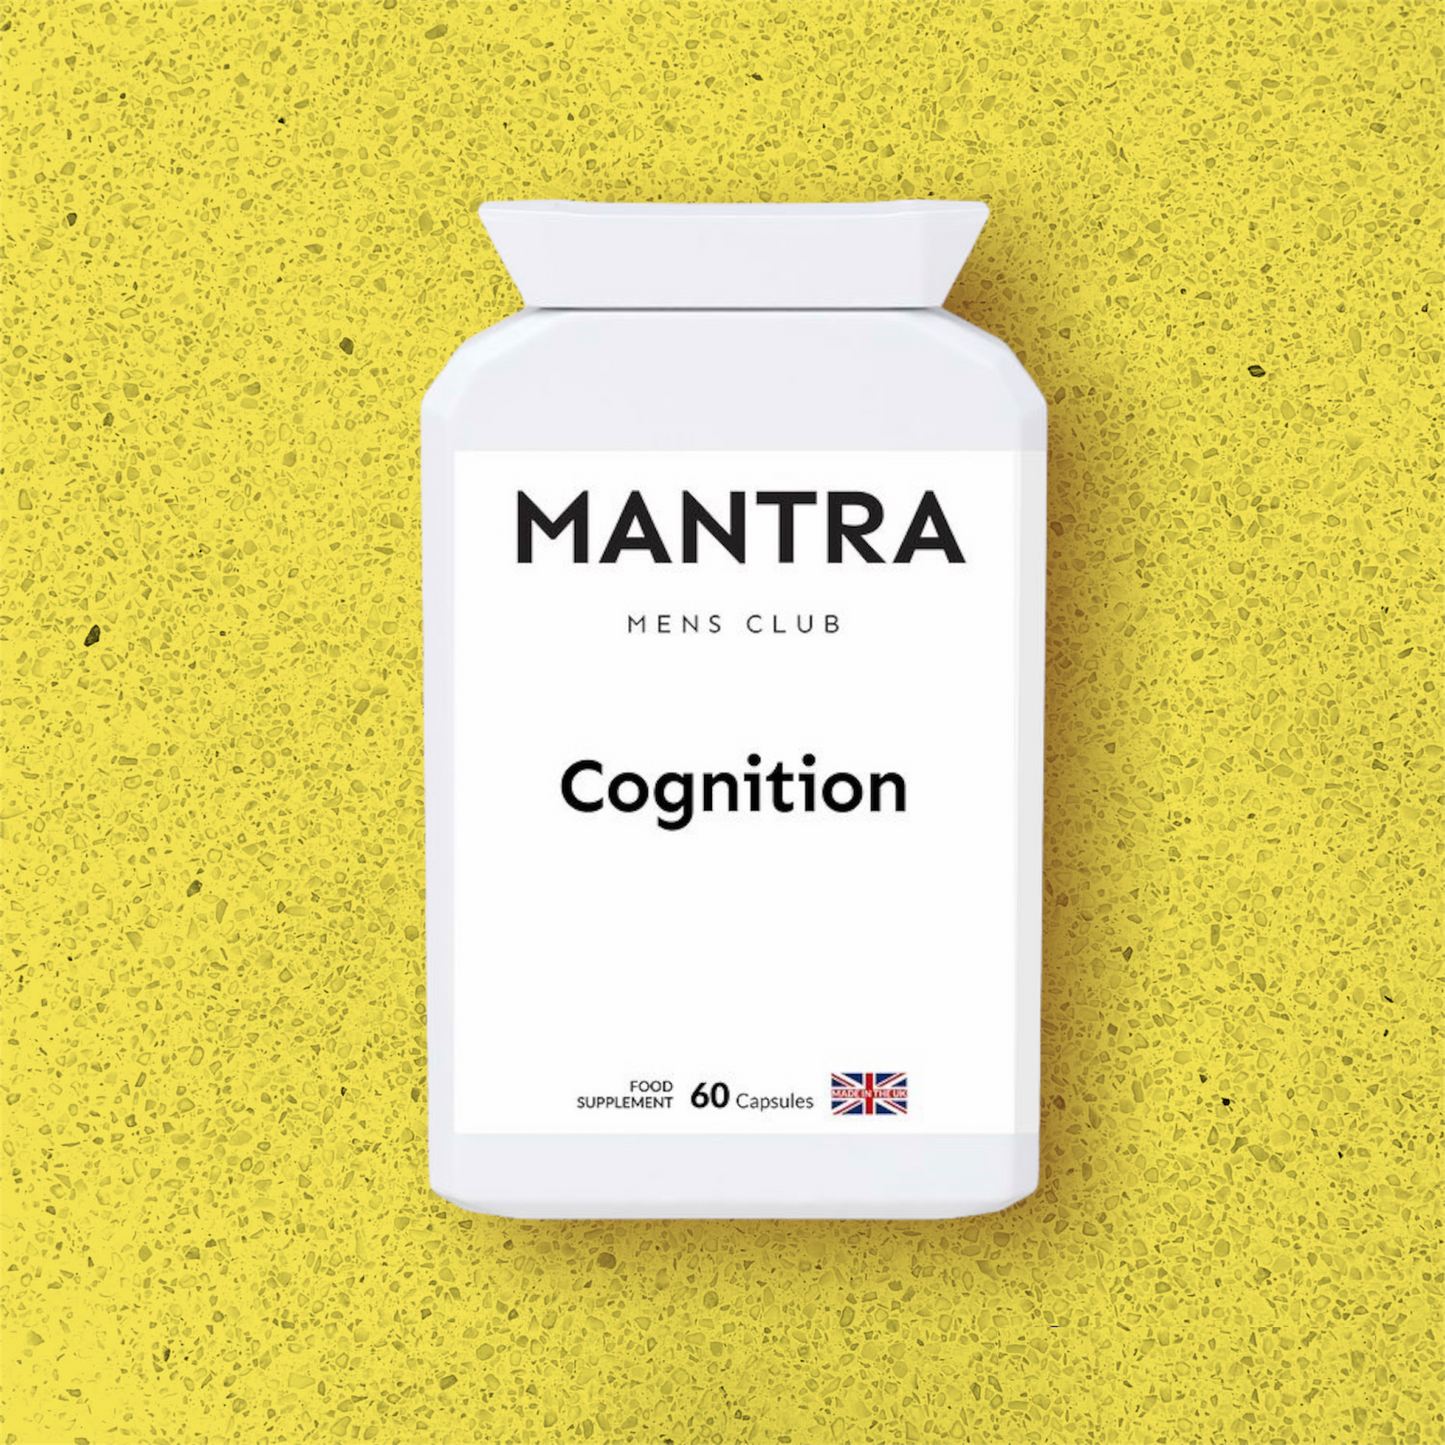 Cognition - Image #2